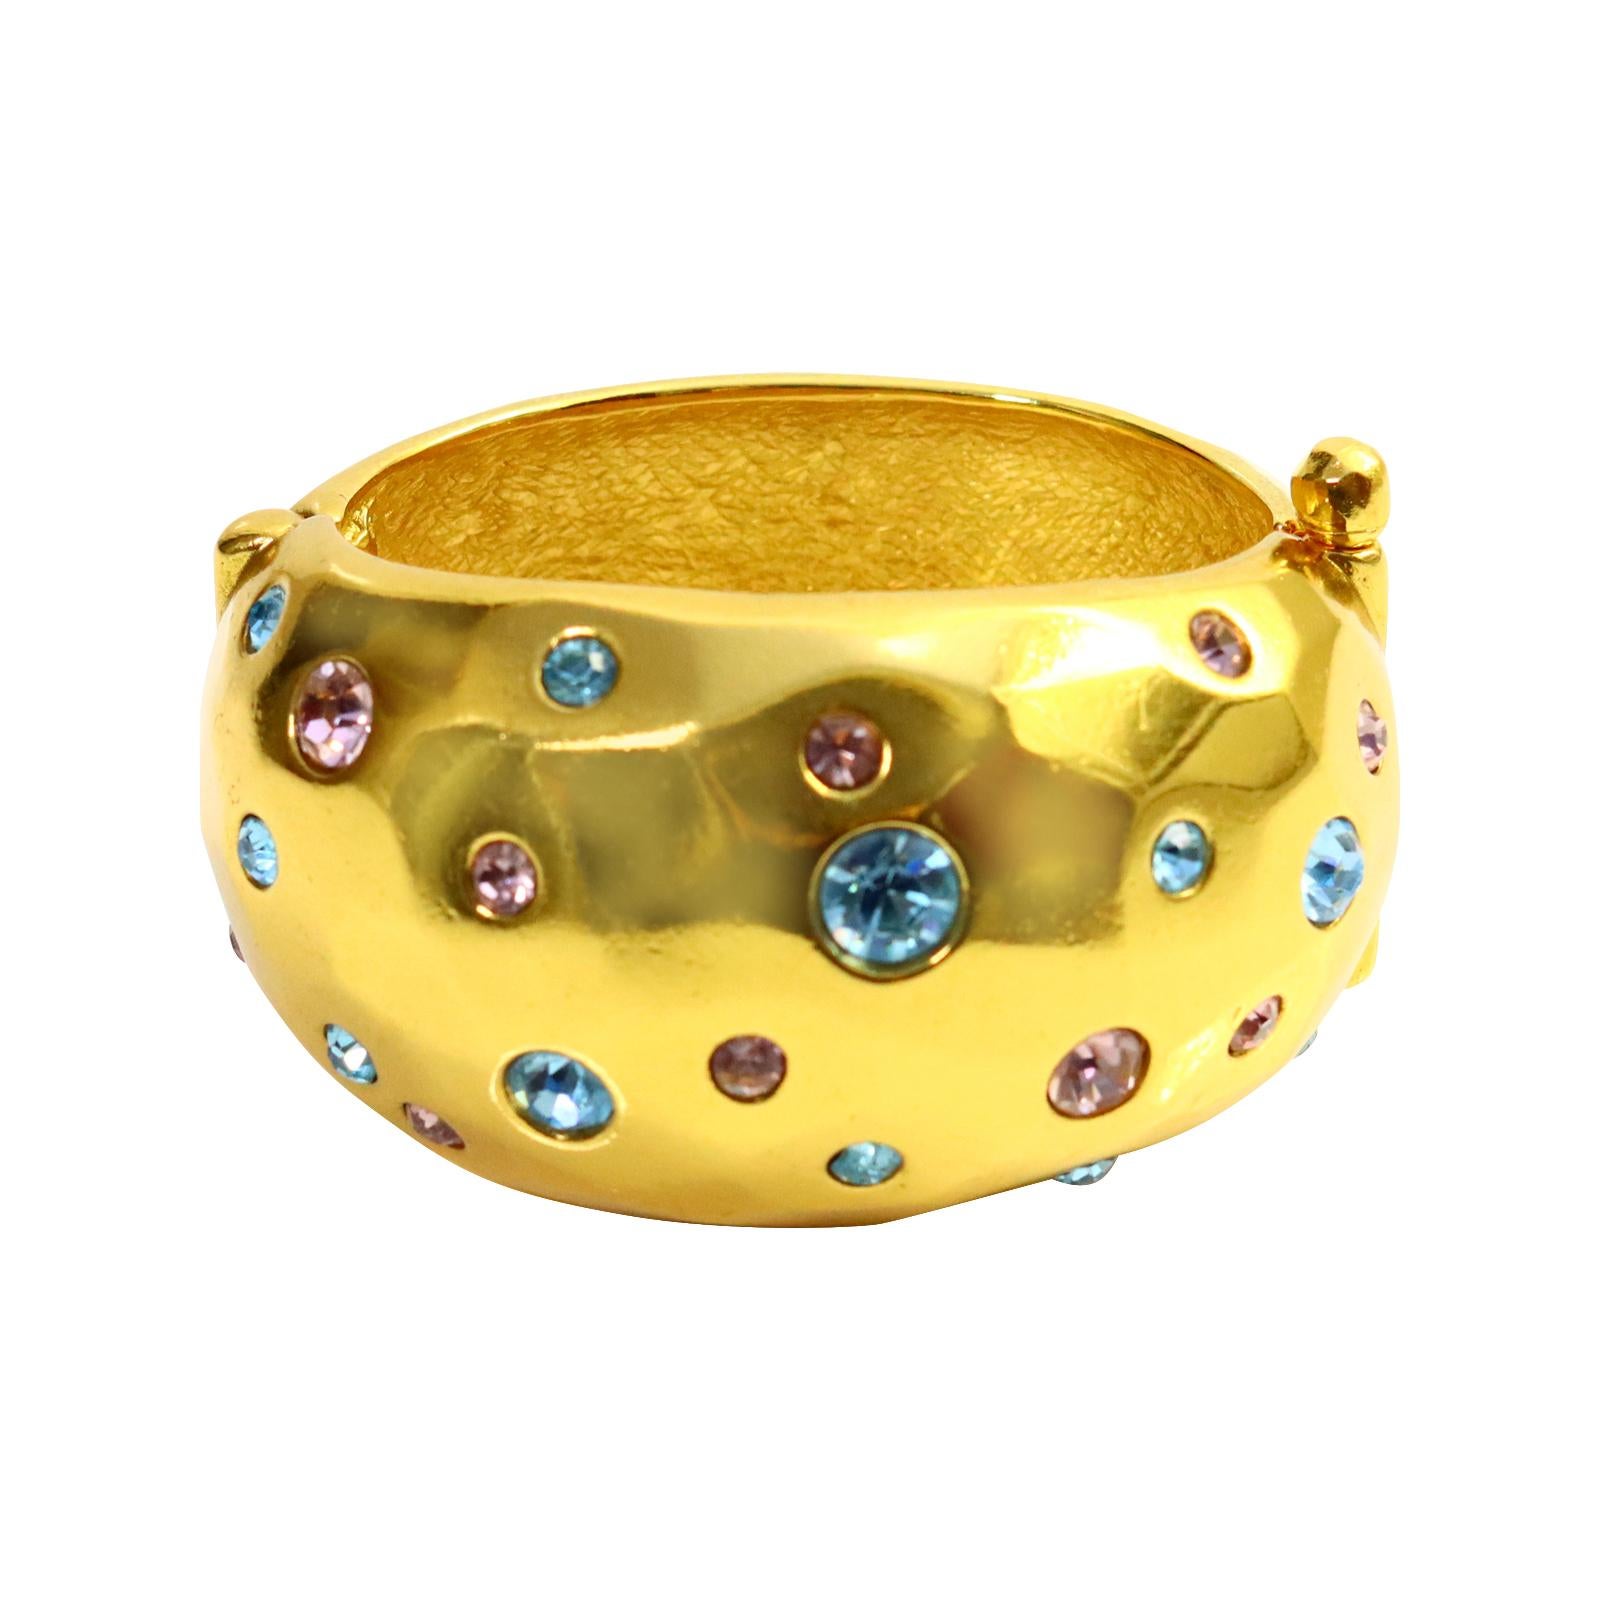 Artist Vintage Yves Saint Laurent YSL Gold Tone Rounded Bracelet Cuff Circa 1990s For Sale